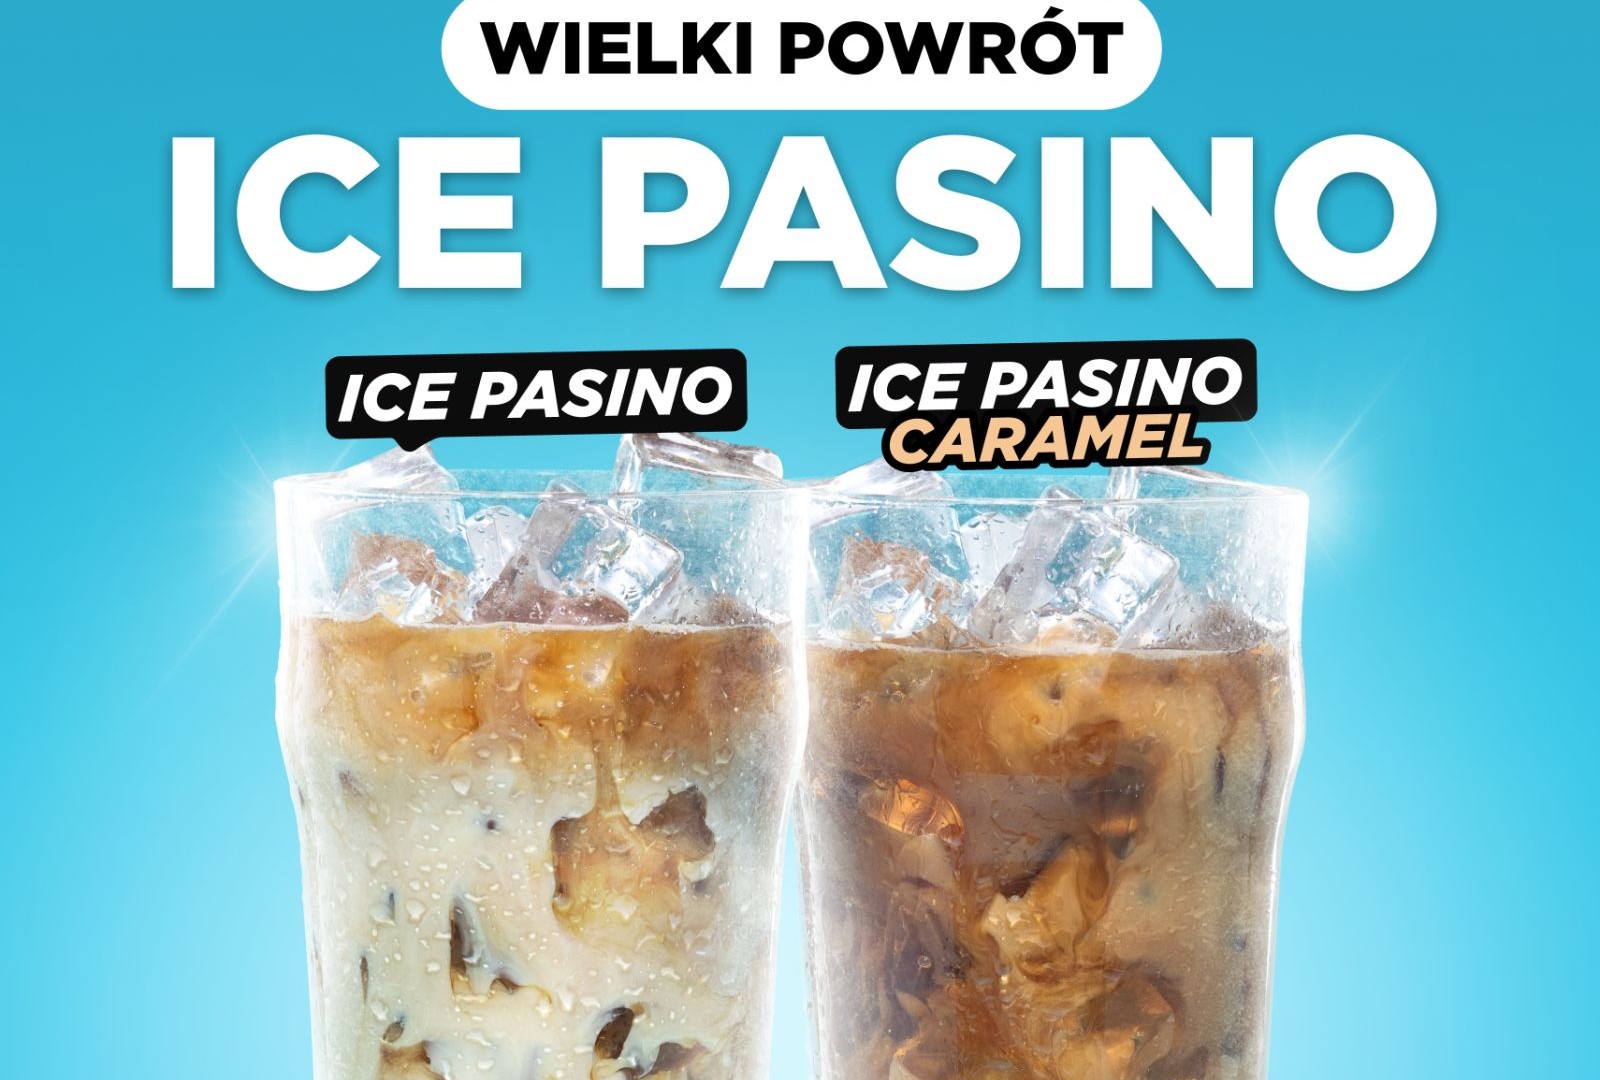 Ice Pasino – kawa mrożona wraca do Pasibusa